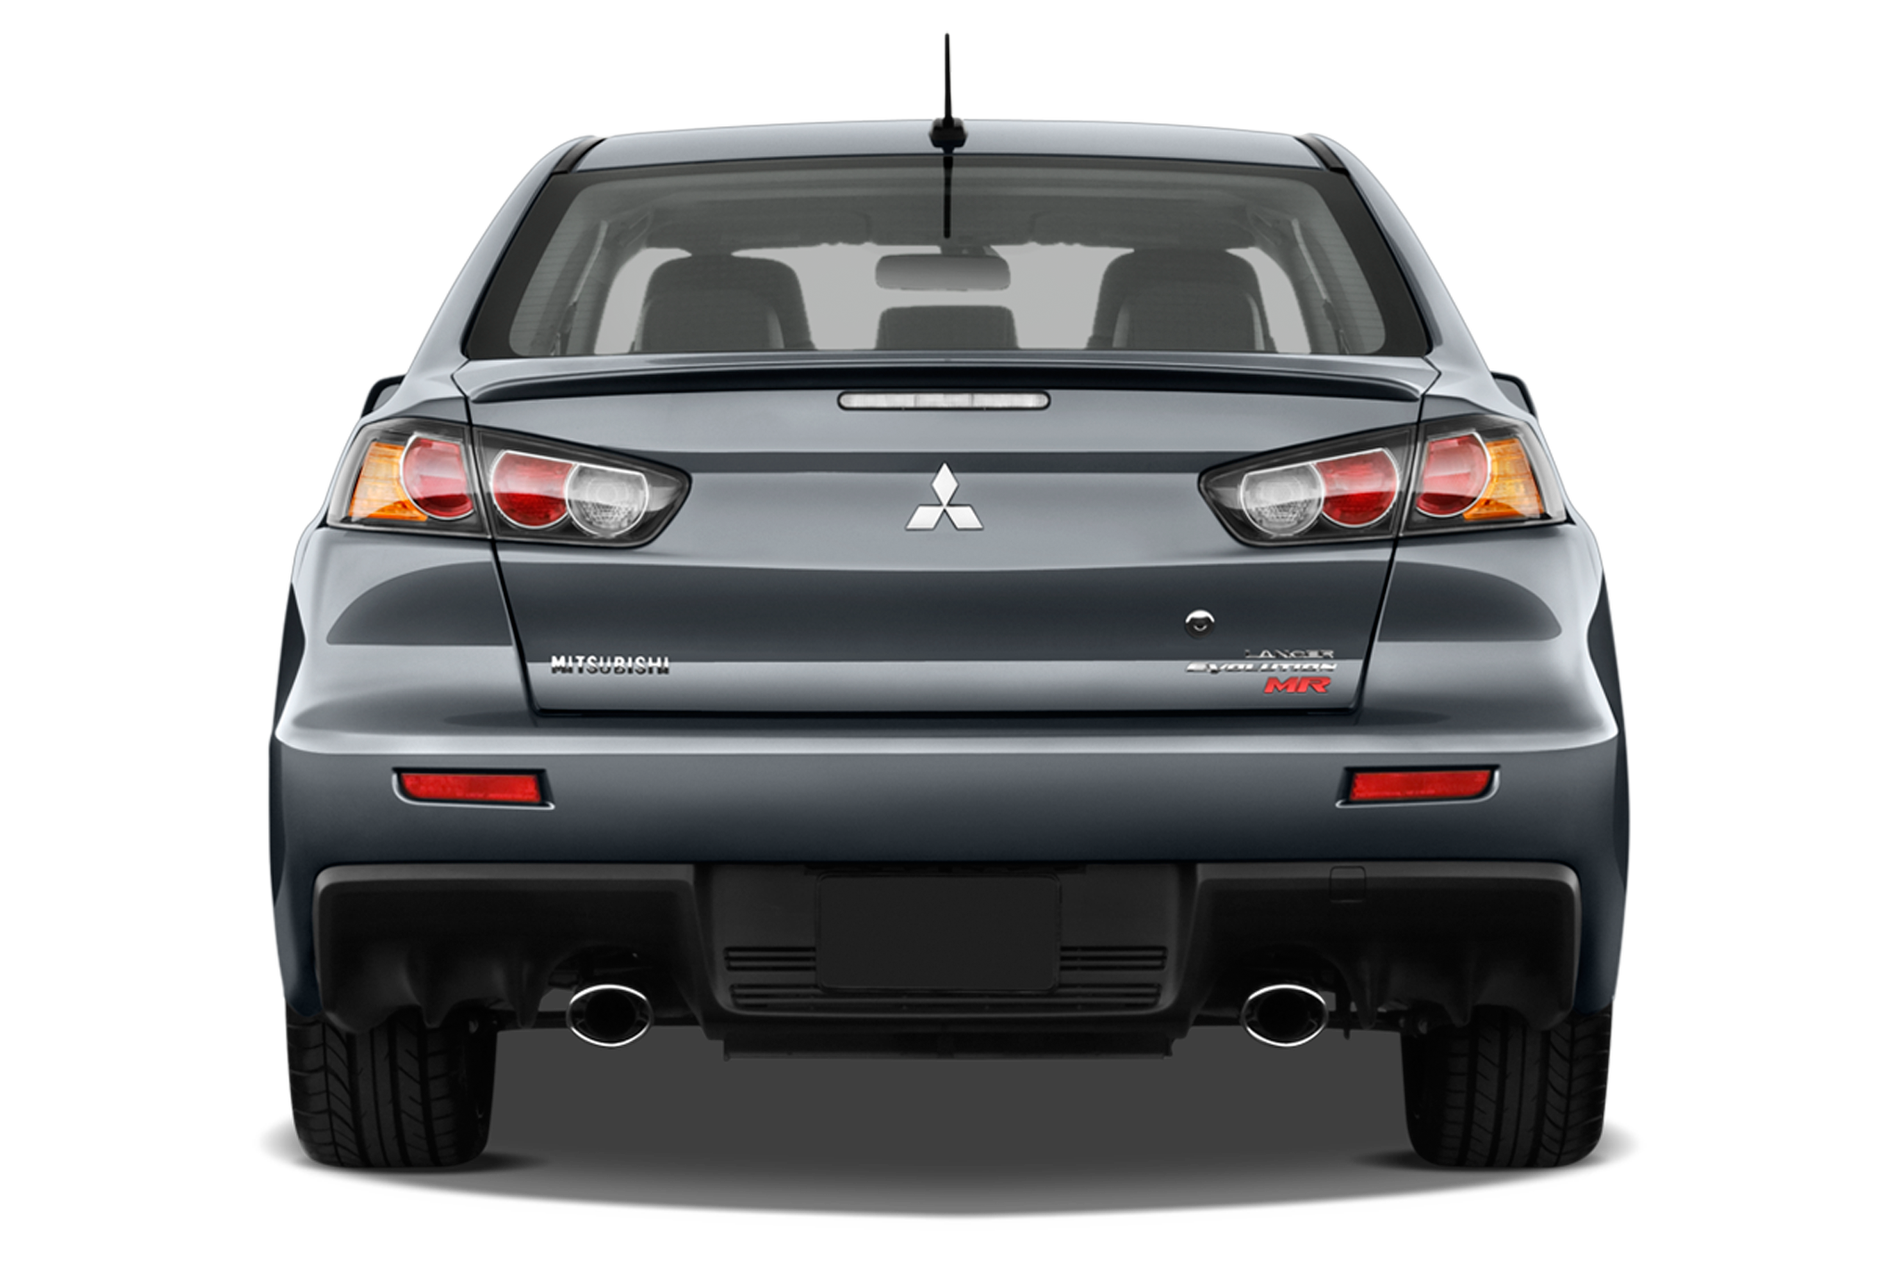 2012-mitsubishi-lancer-evolution-mr-sedan-rear-view.png